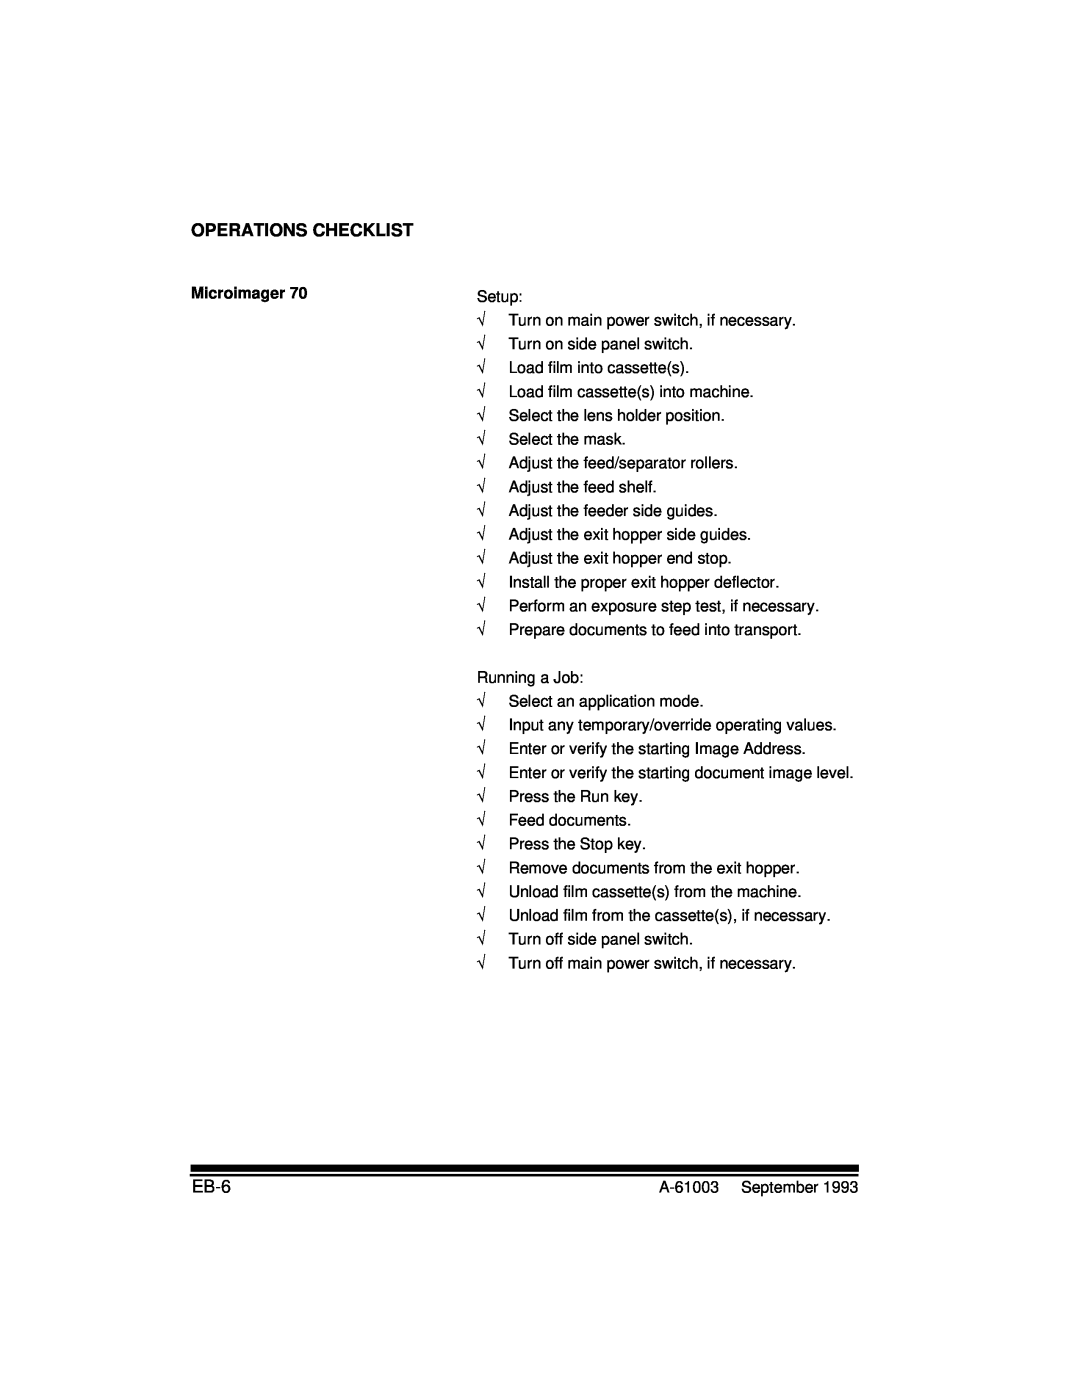 Kodak A-61003 manual Operations Checklist, EB-6 